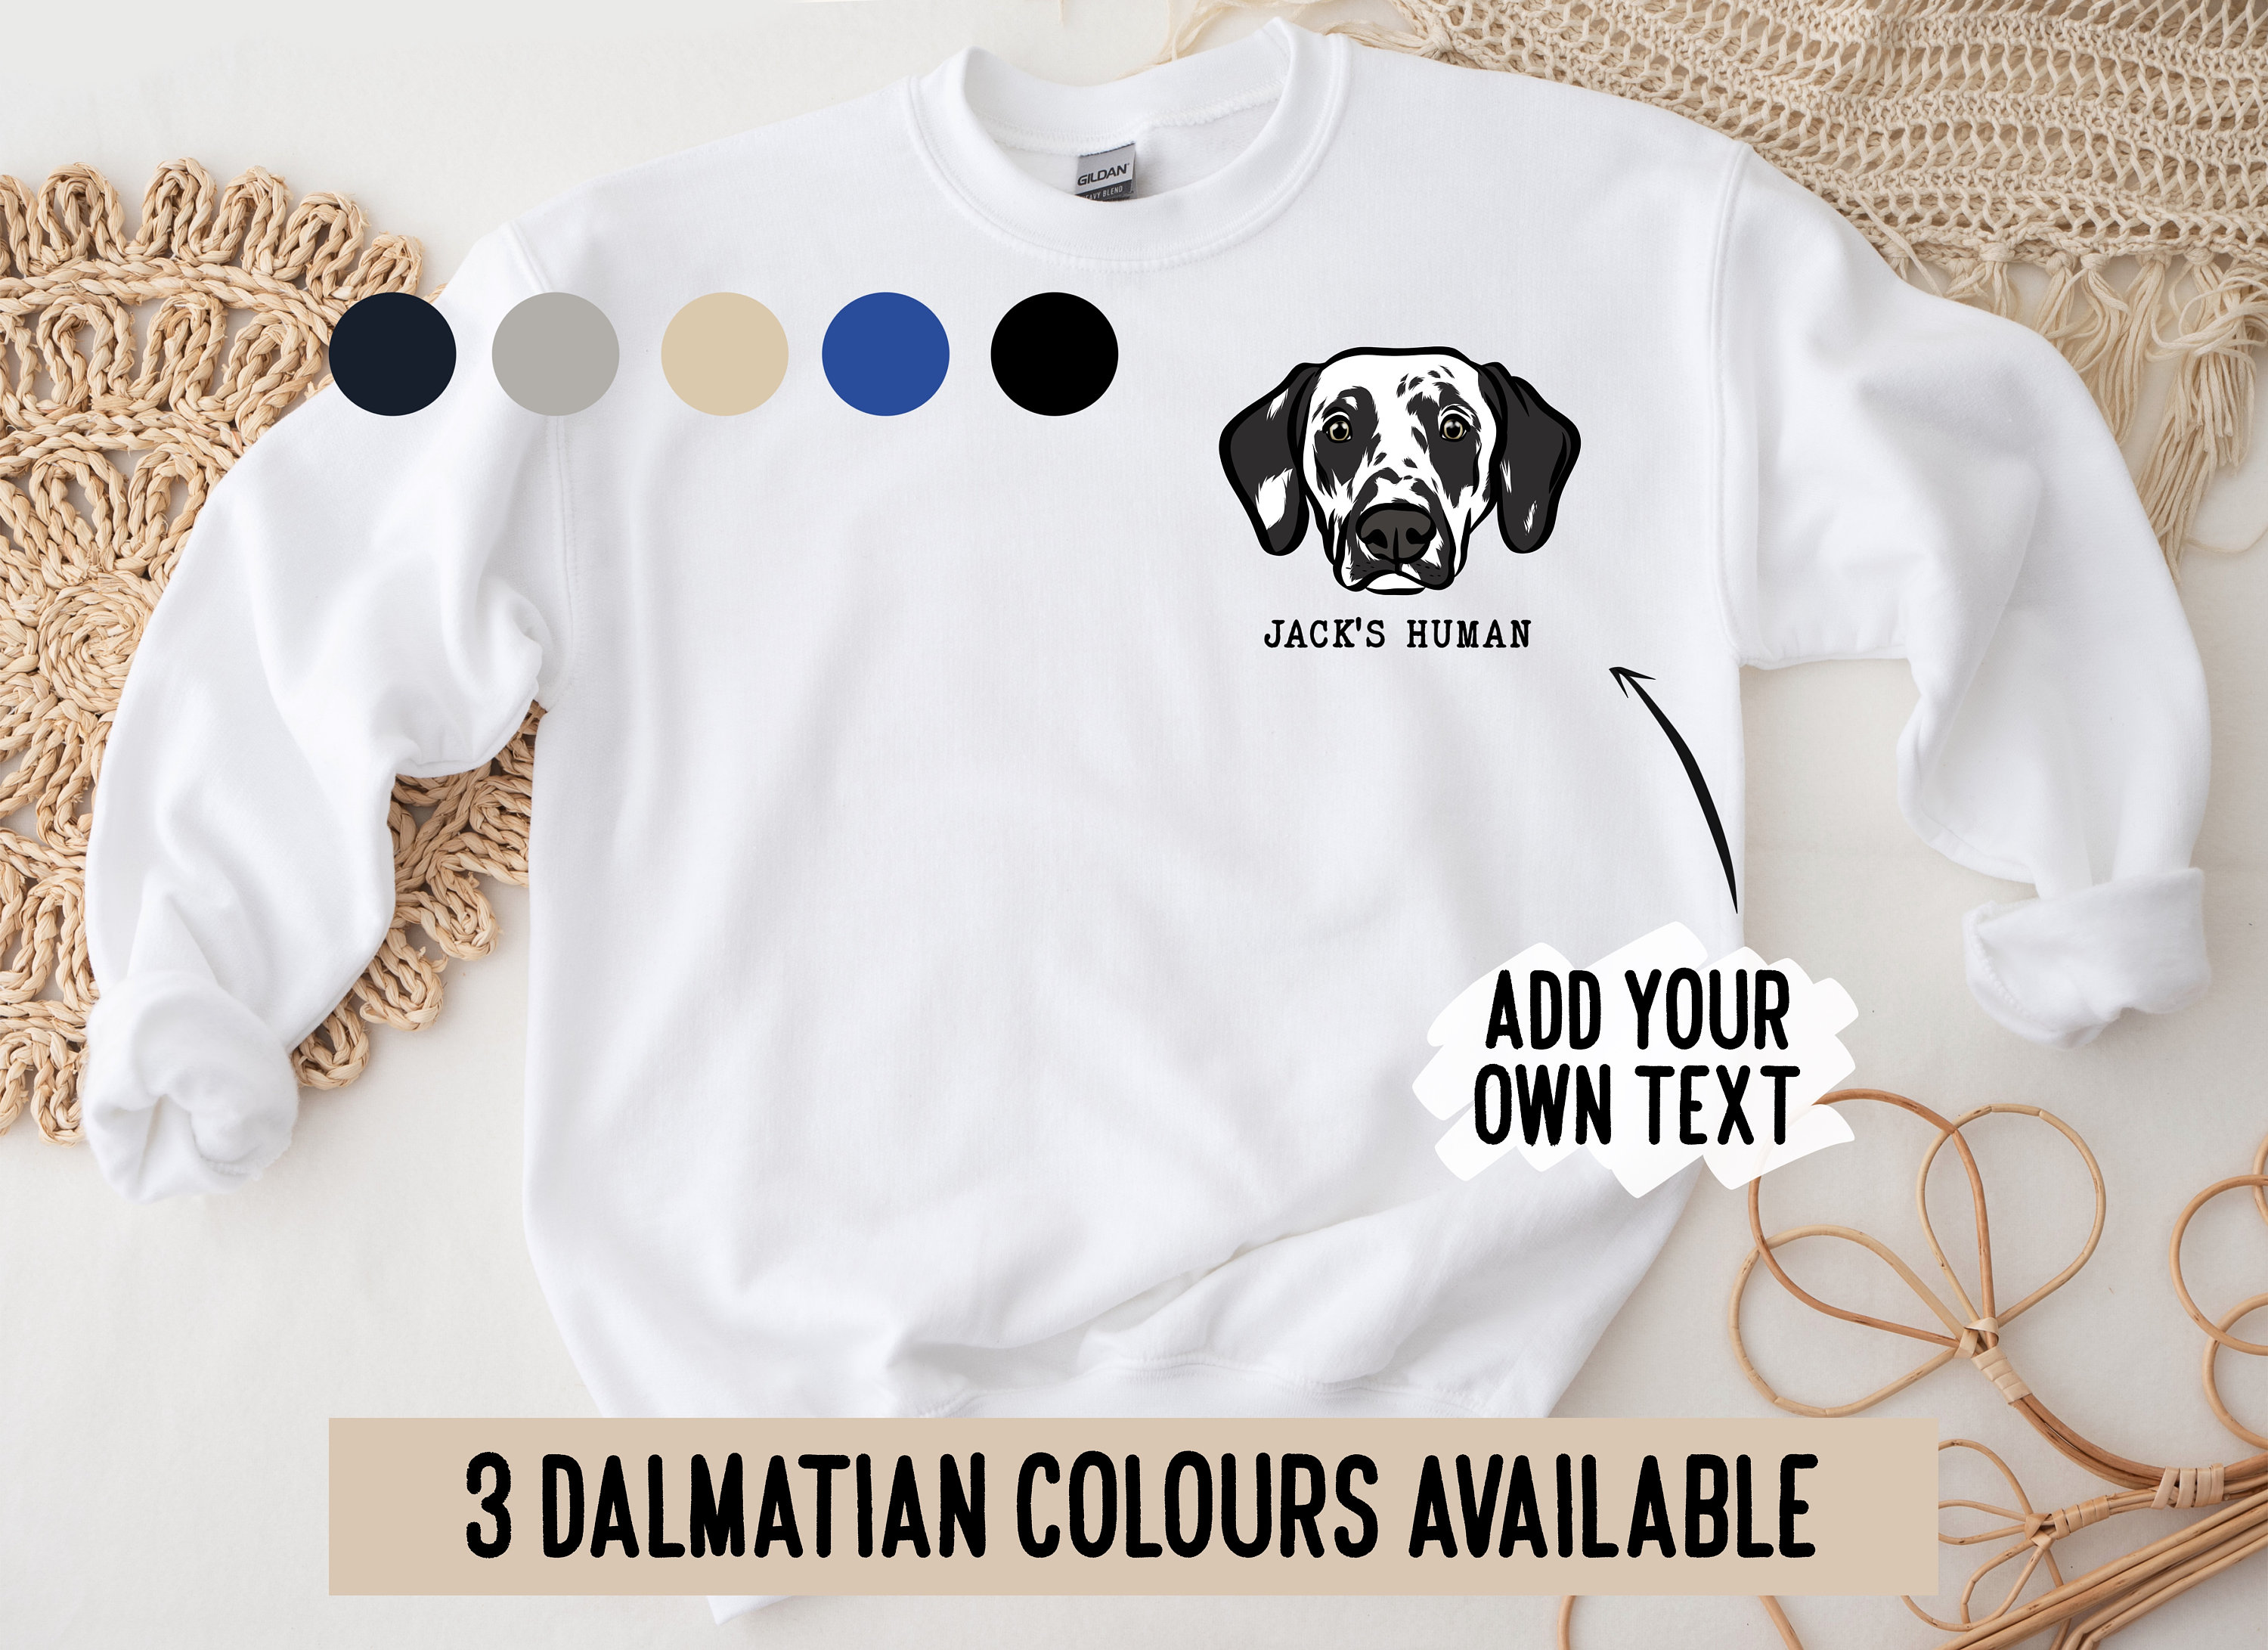 Dalmatian Print Long Sleeve Shirt, Dalmatian Costume, Dalmatian Party Shirt, Halloween Costume, Youth Kids Dalmatian Shirts, Dalmation Dog